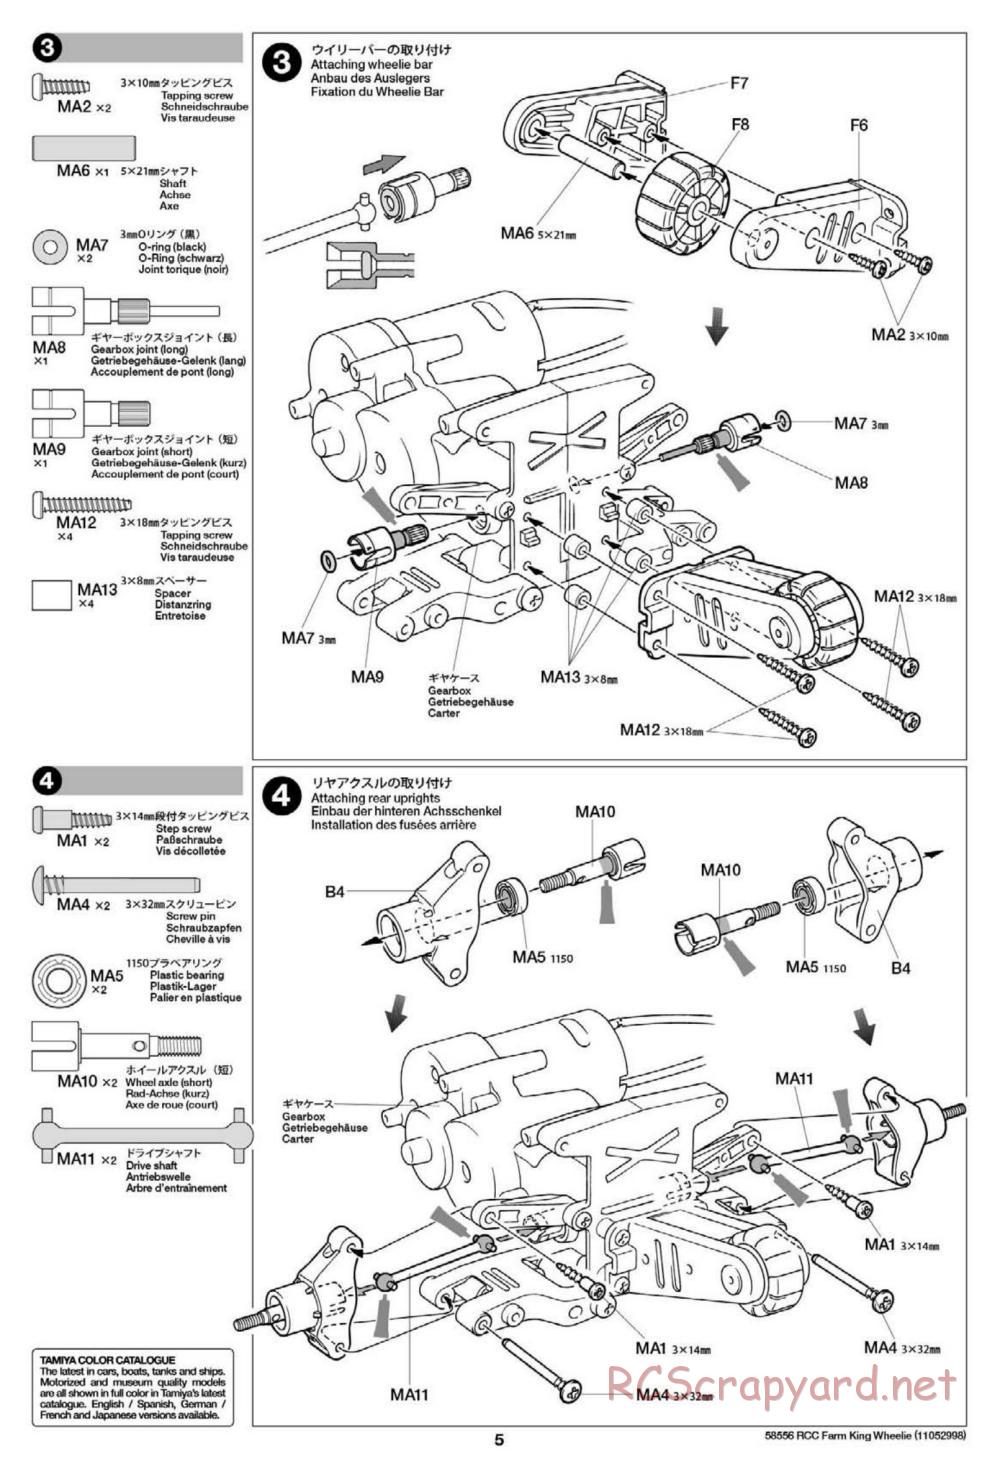 Tamiya - Farm King Wheelie Chassis - Manual - Page 5